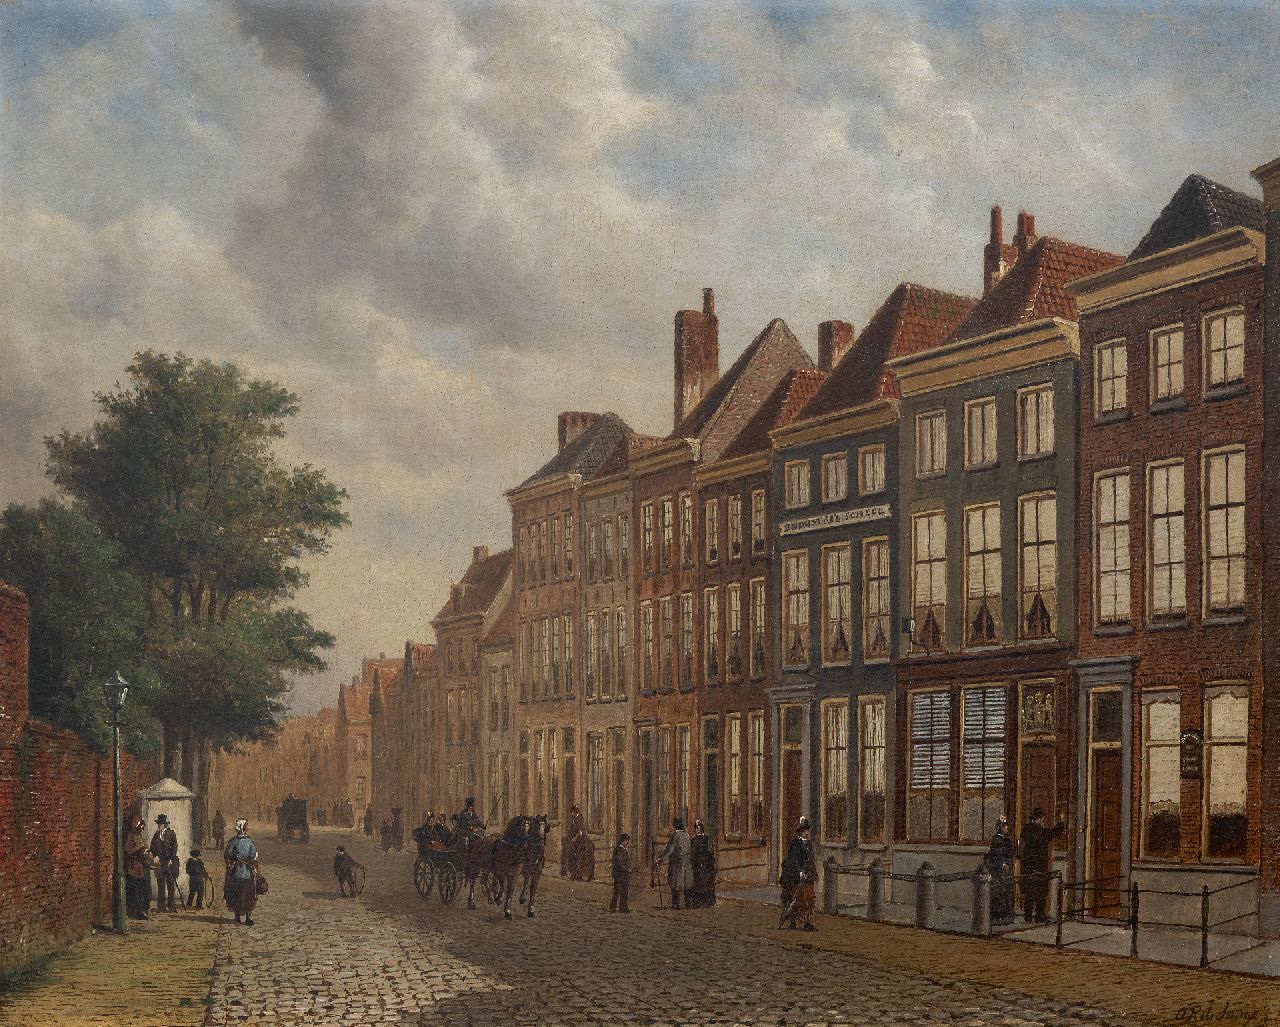 Jongh O.R. de | Oene Romkes de Jongh | Paintings offered for sale | A town view, oil on canvas 54.1 x 66.8 cm, signed l.r.